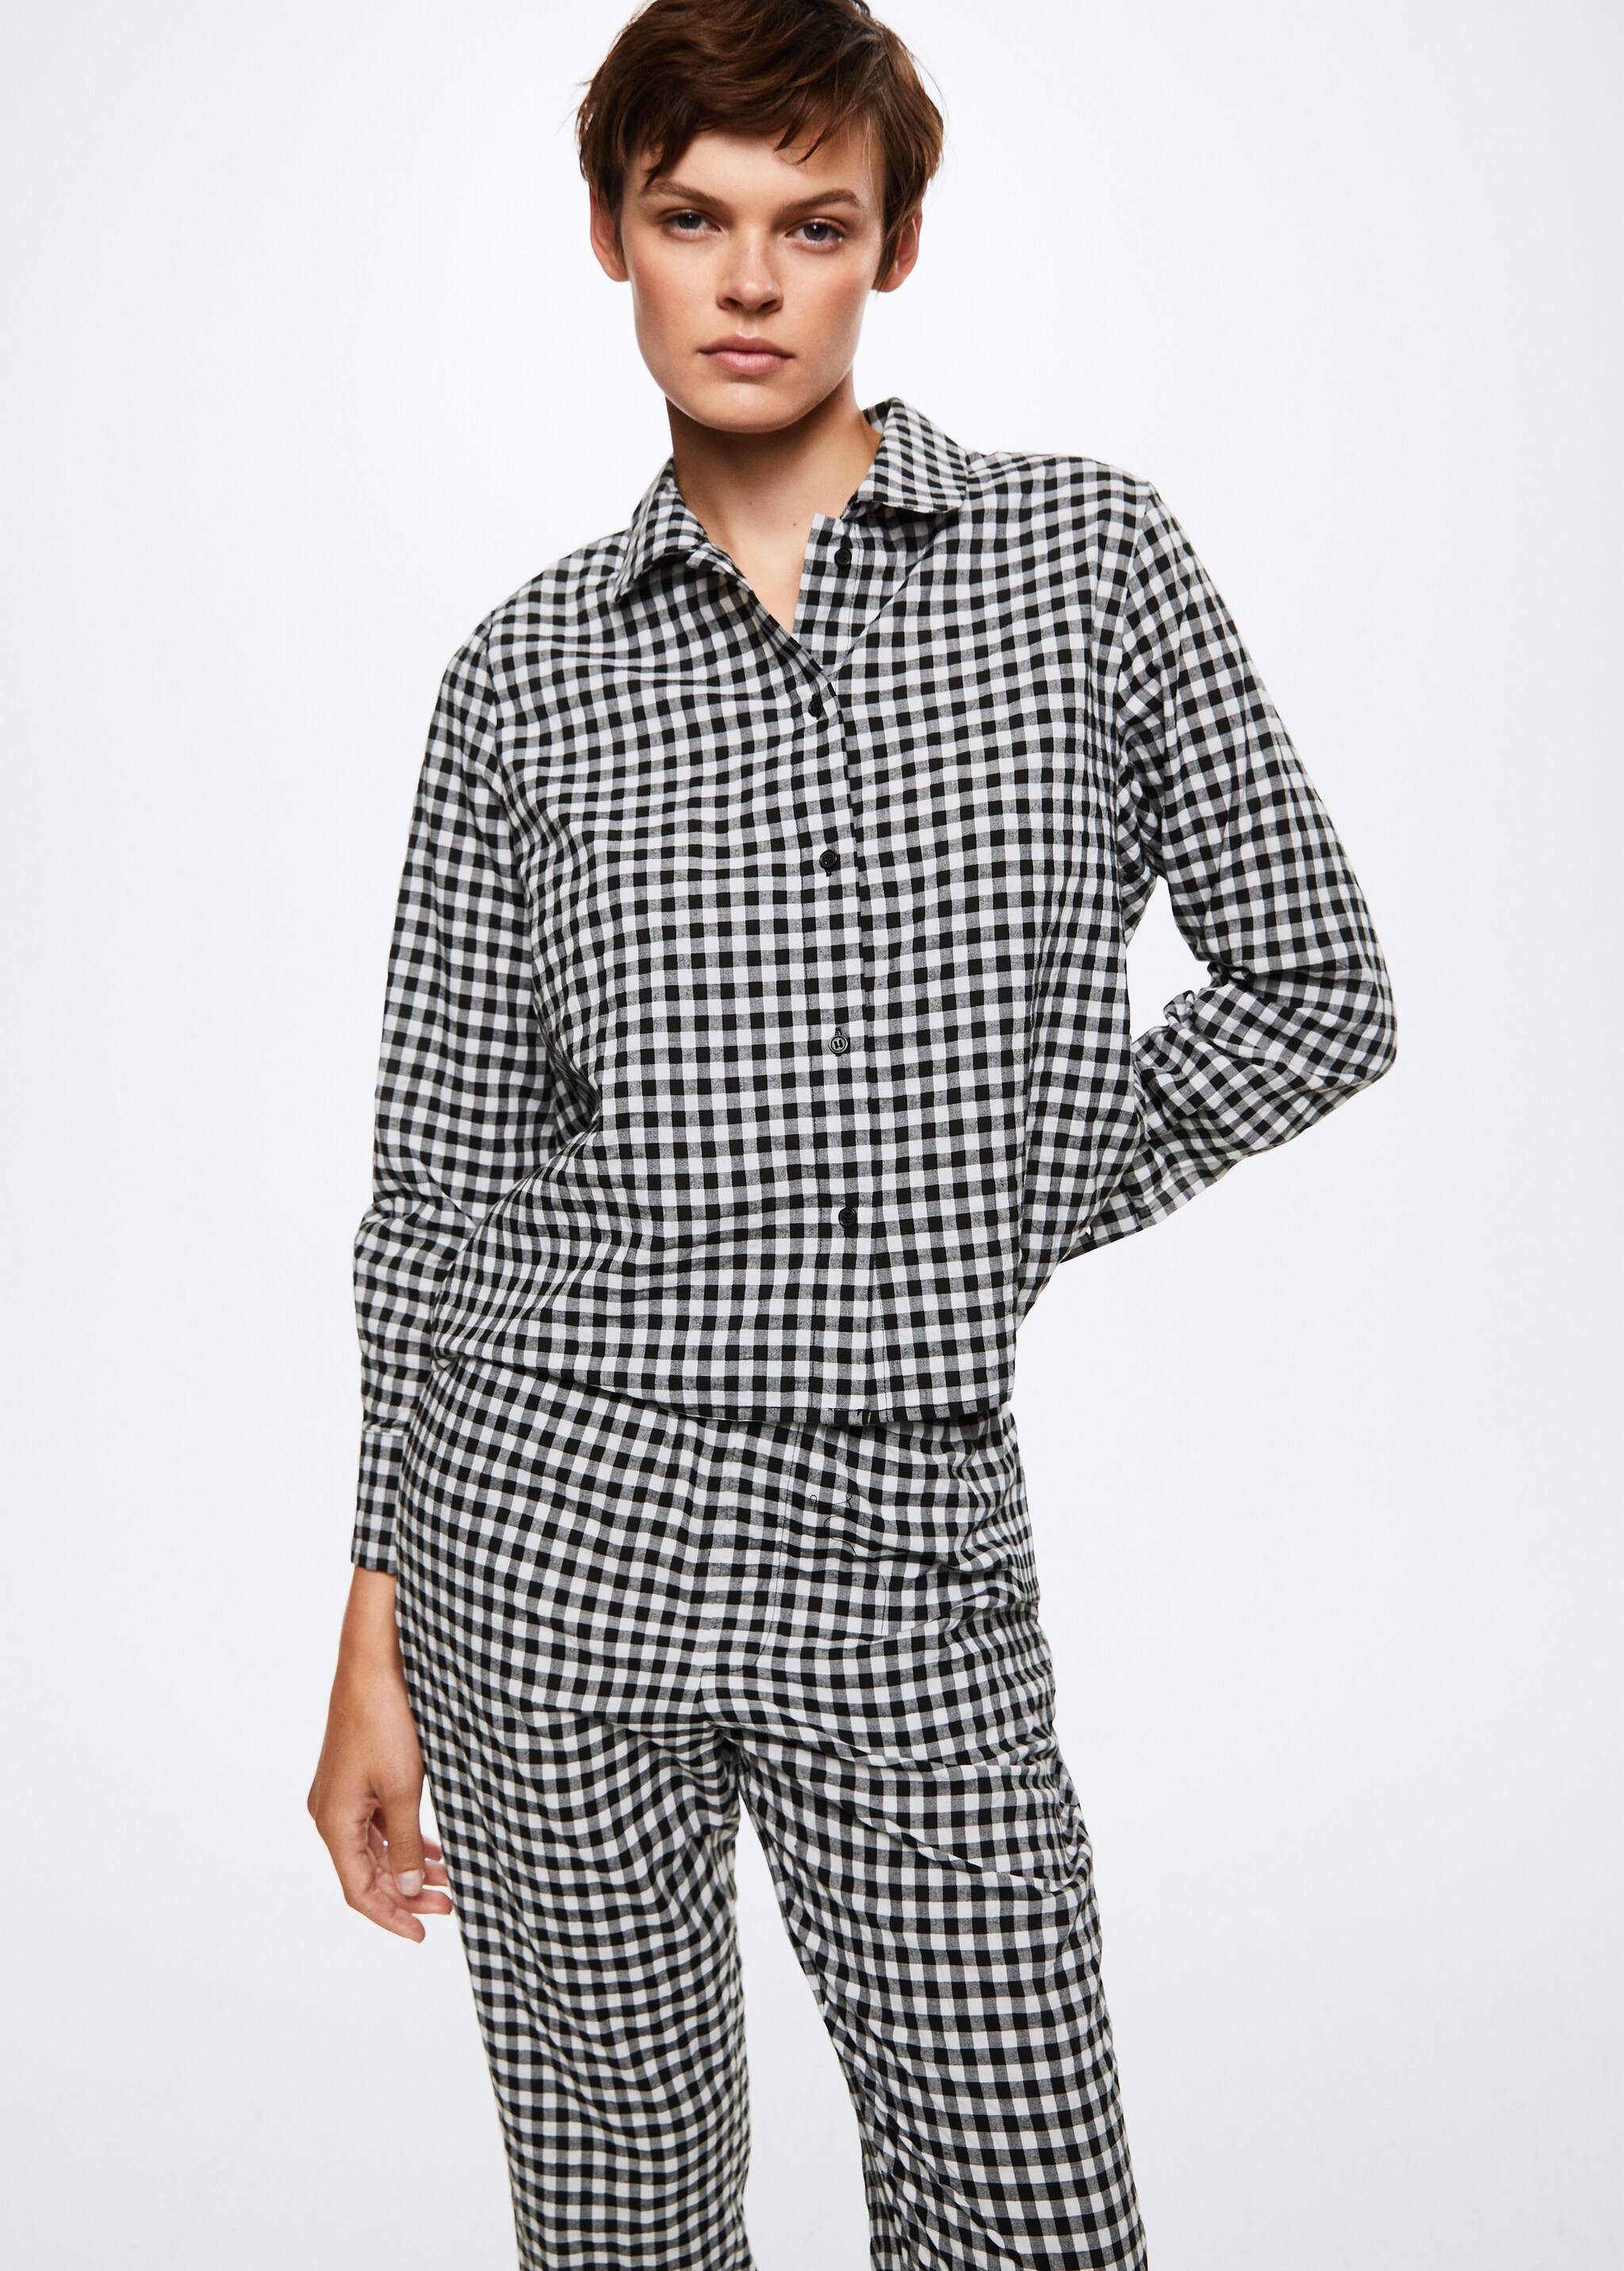 Camisa pijama cuadros franela - Plano medio